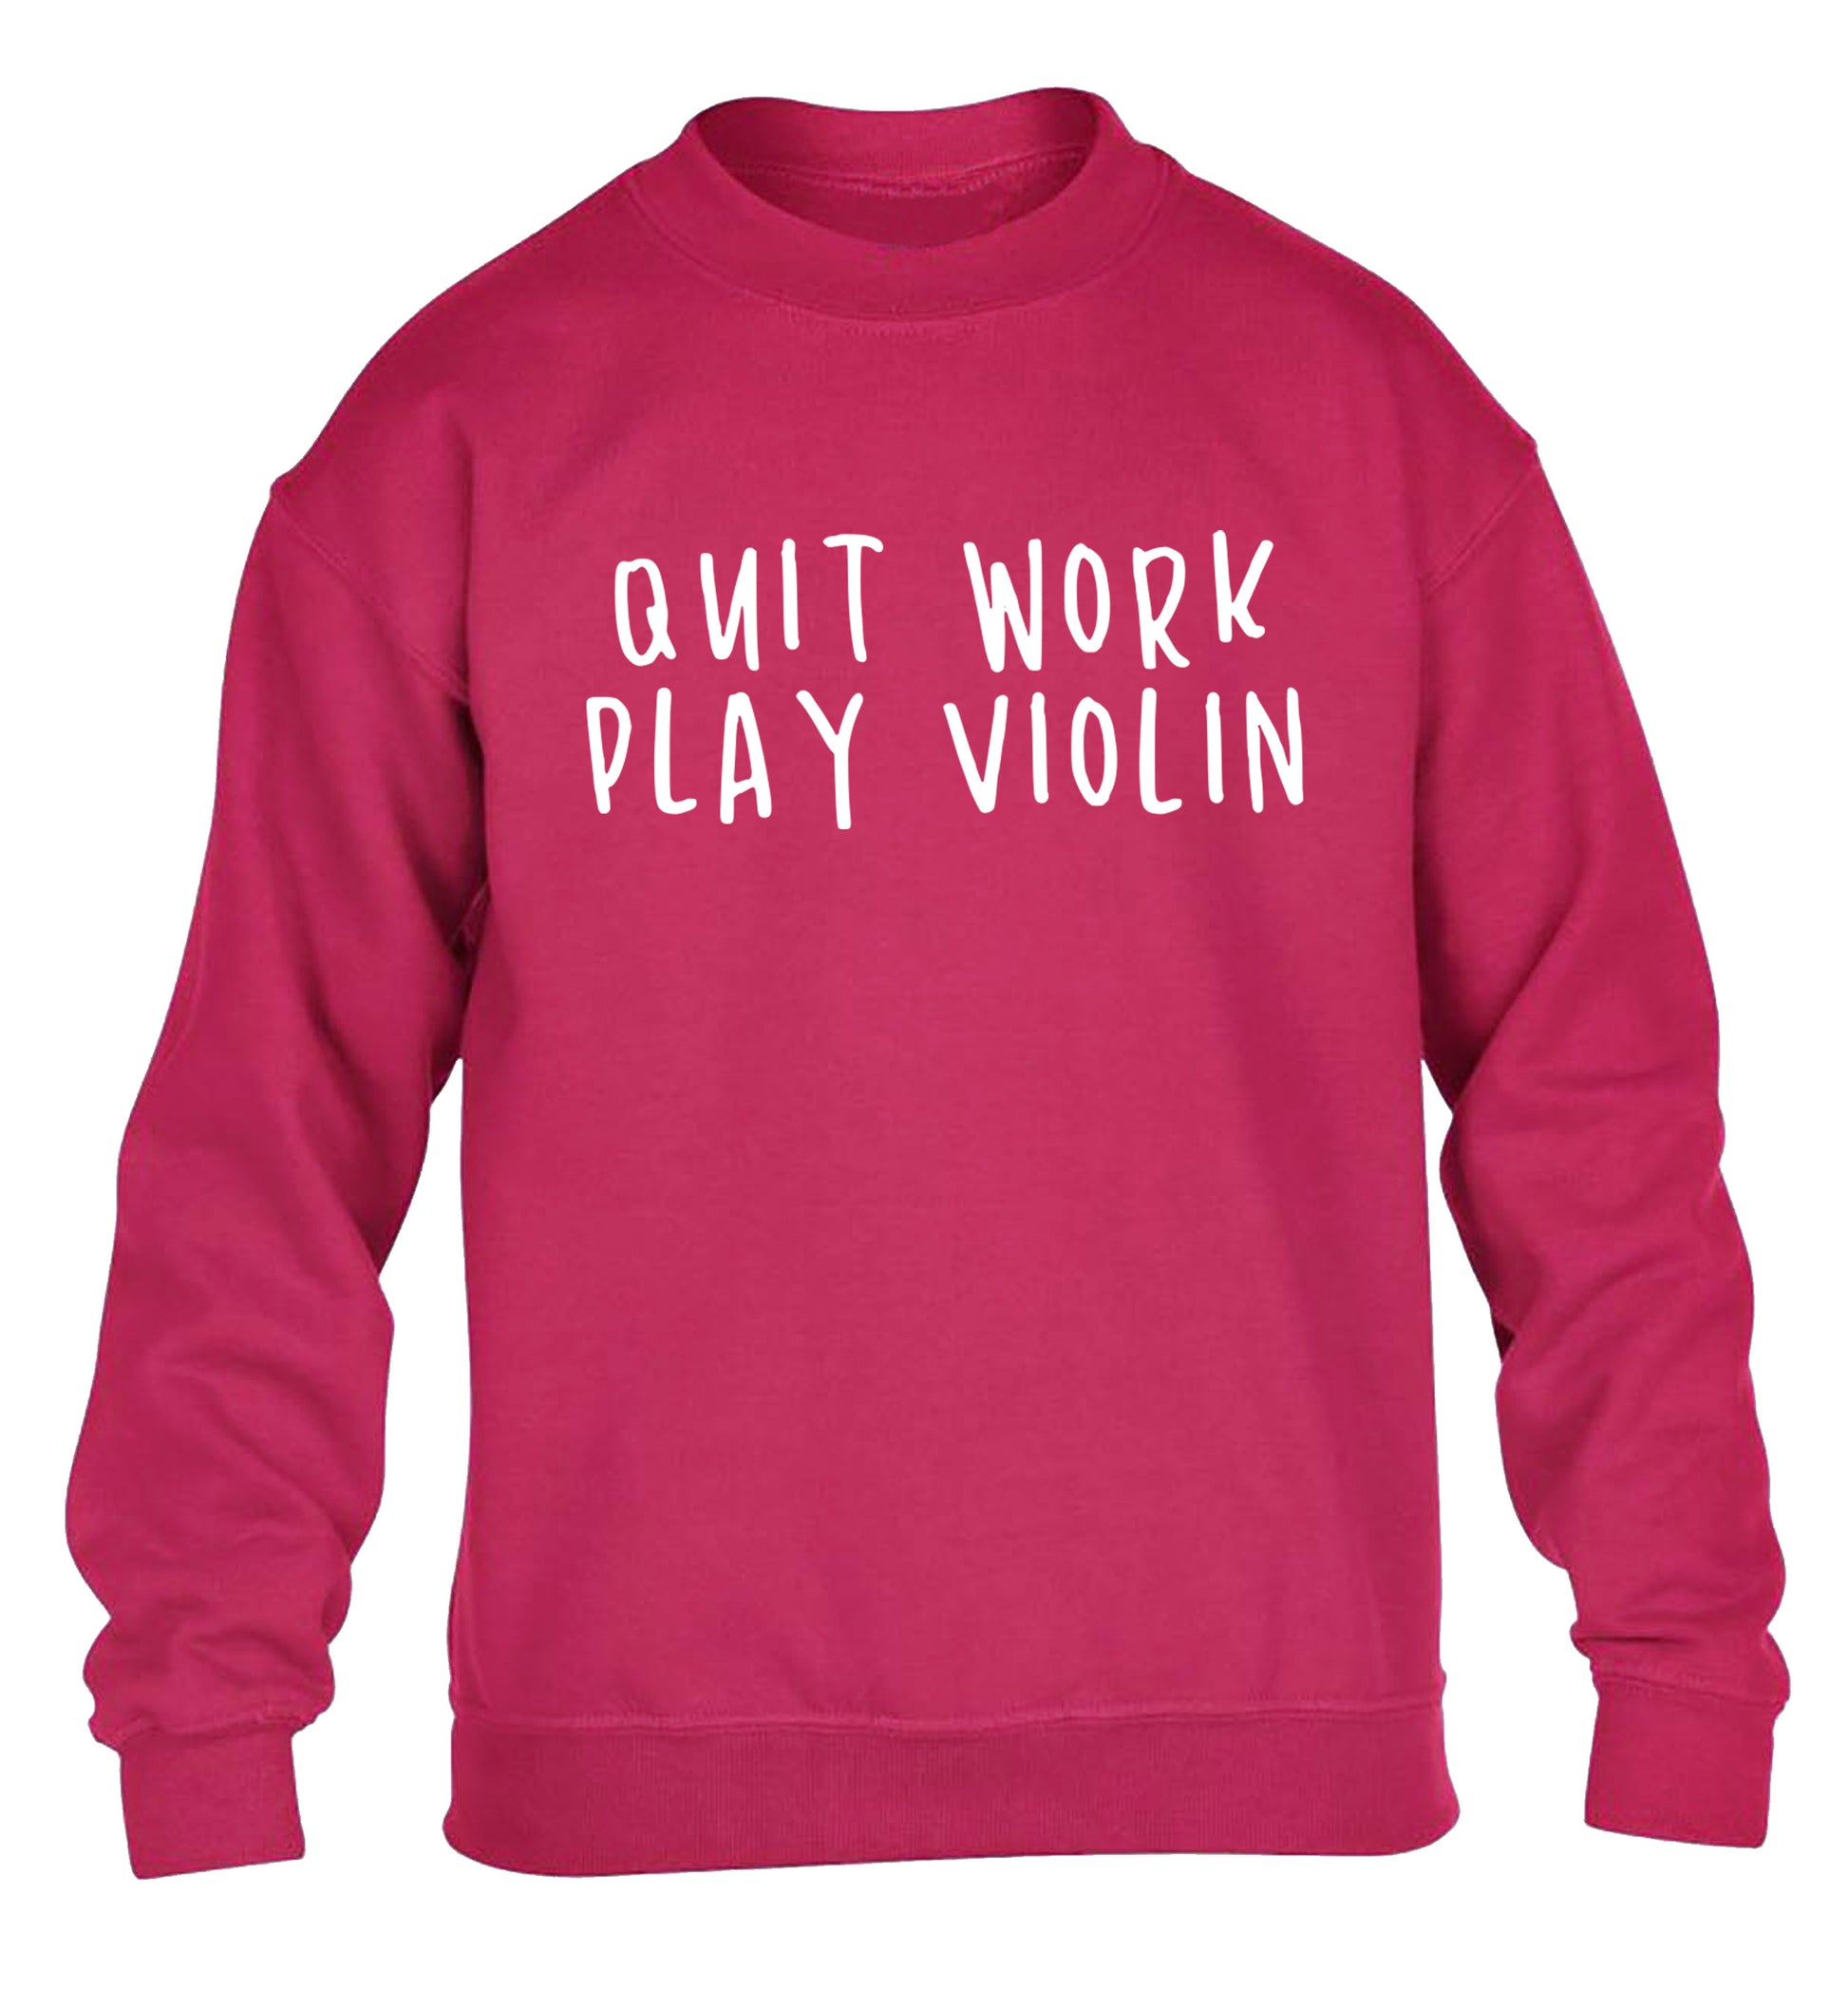 Quit work play violin children's pink sweater 12-13 Years